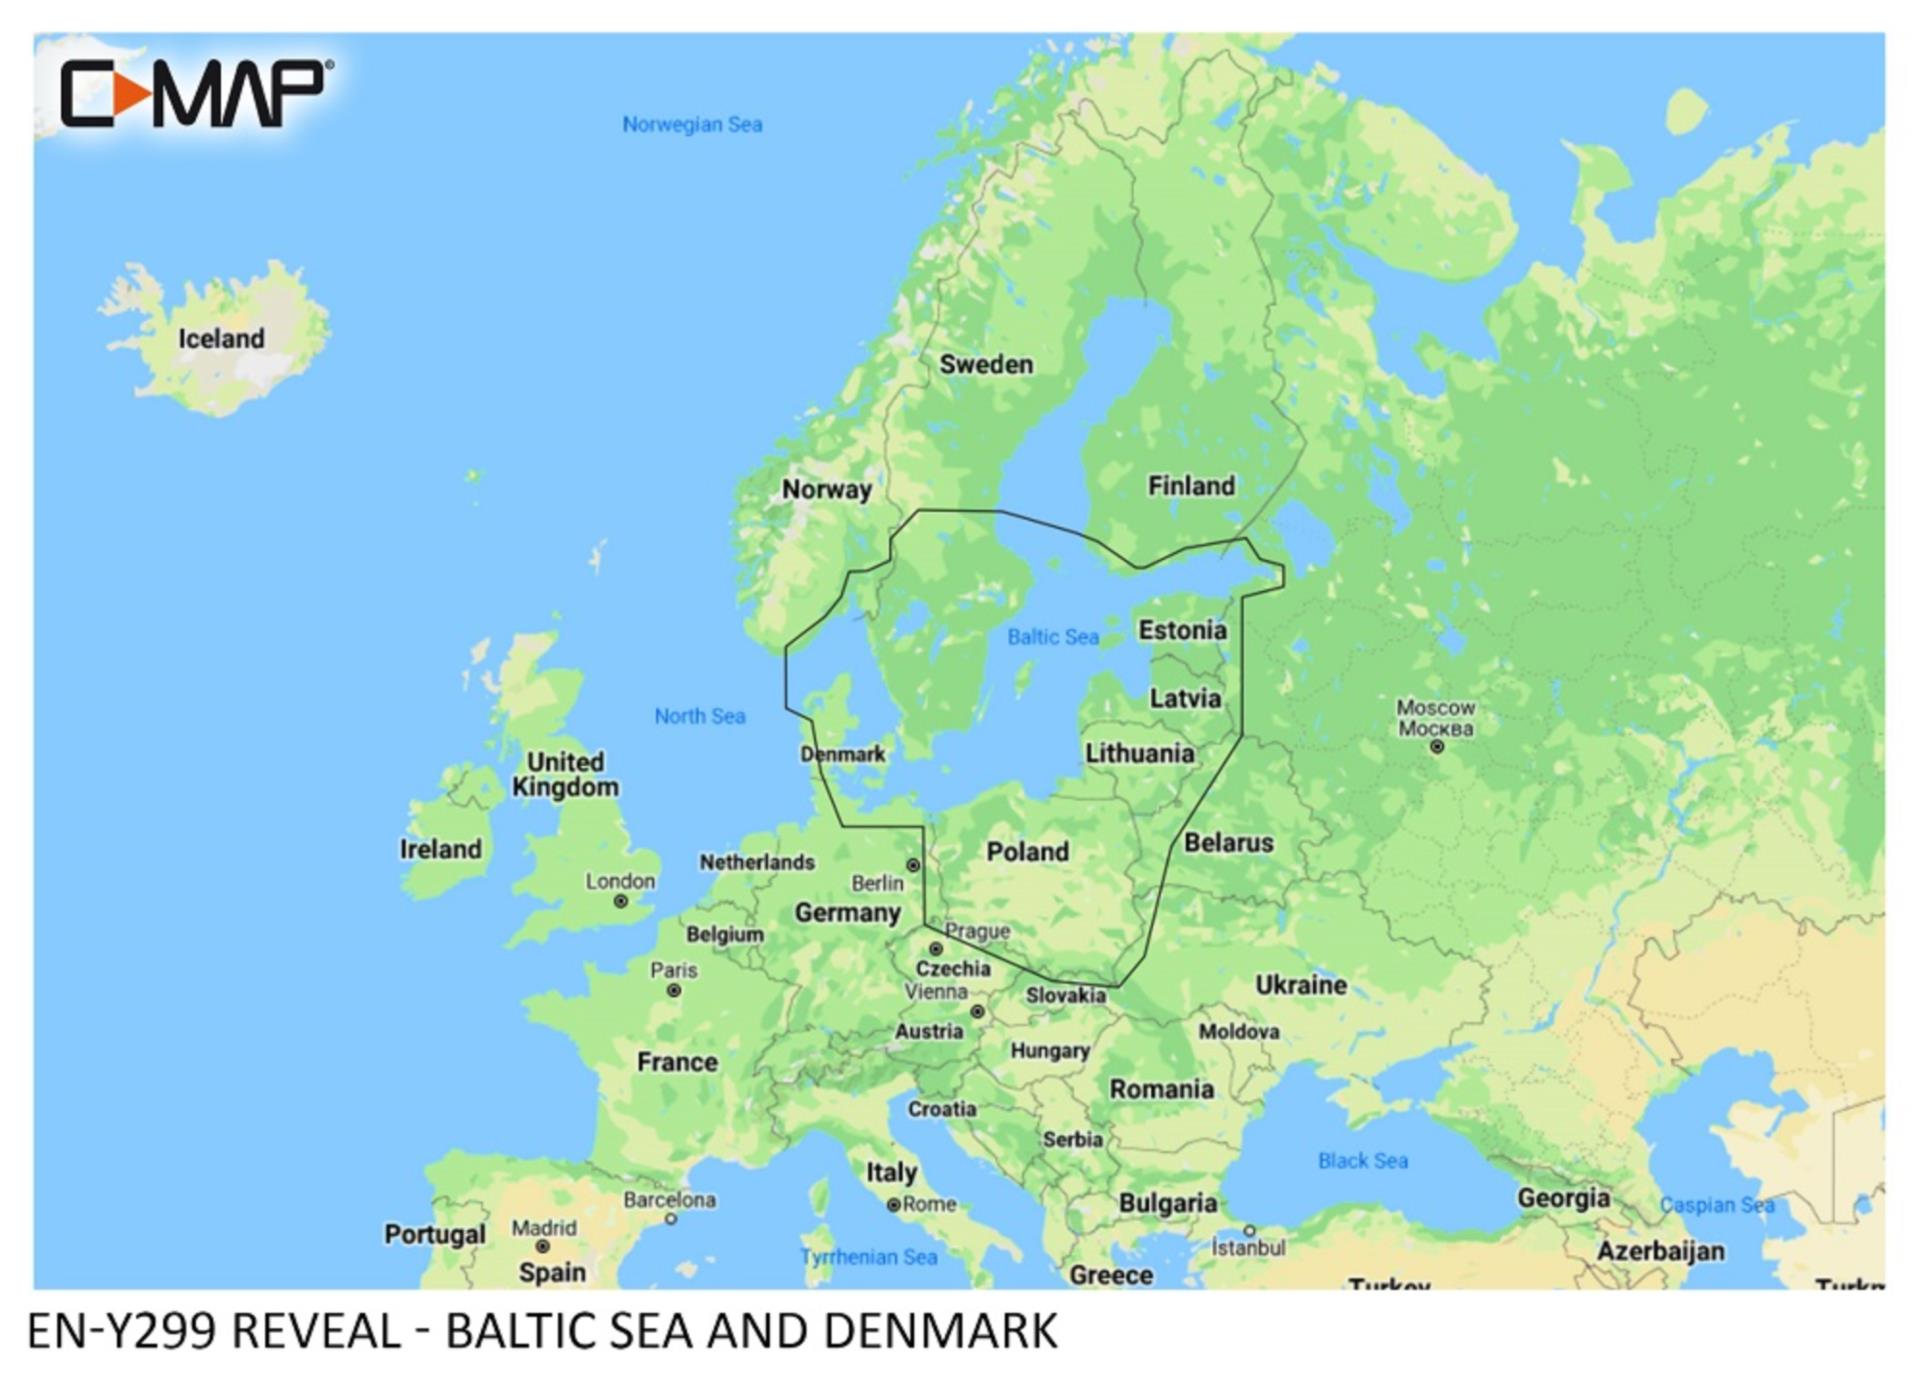 C-MAP Reveal L Baltic Sea